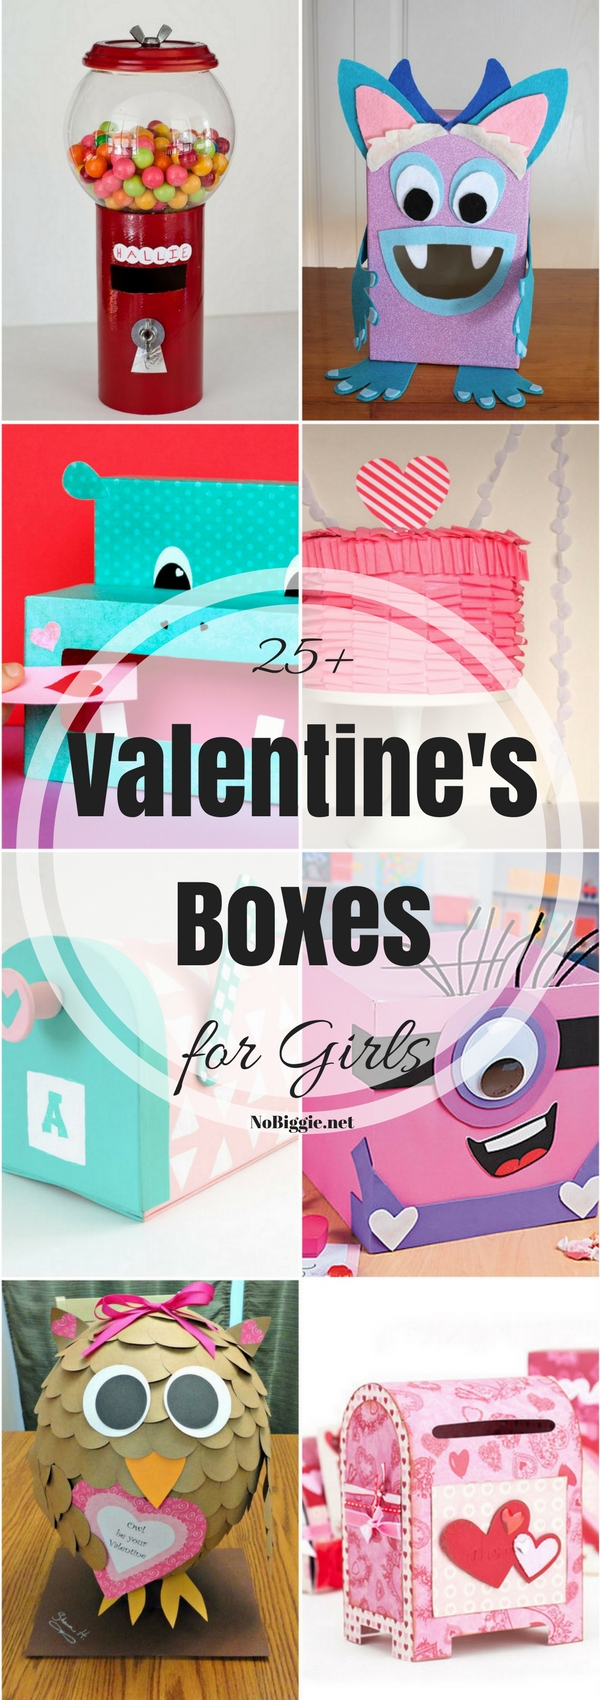 25-valentine-boxes-for-girls-nobiggie